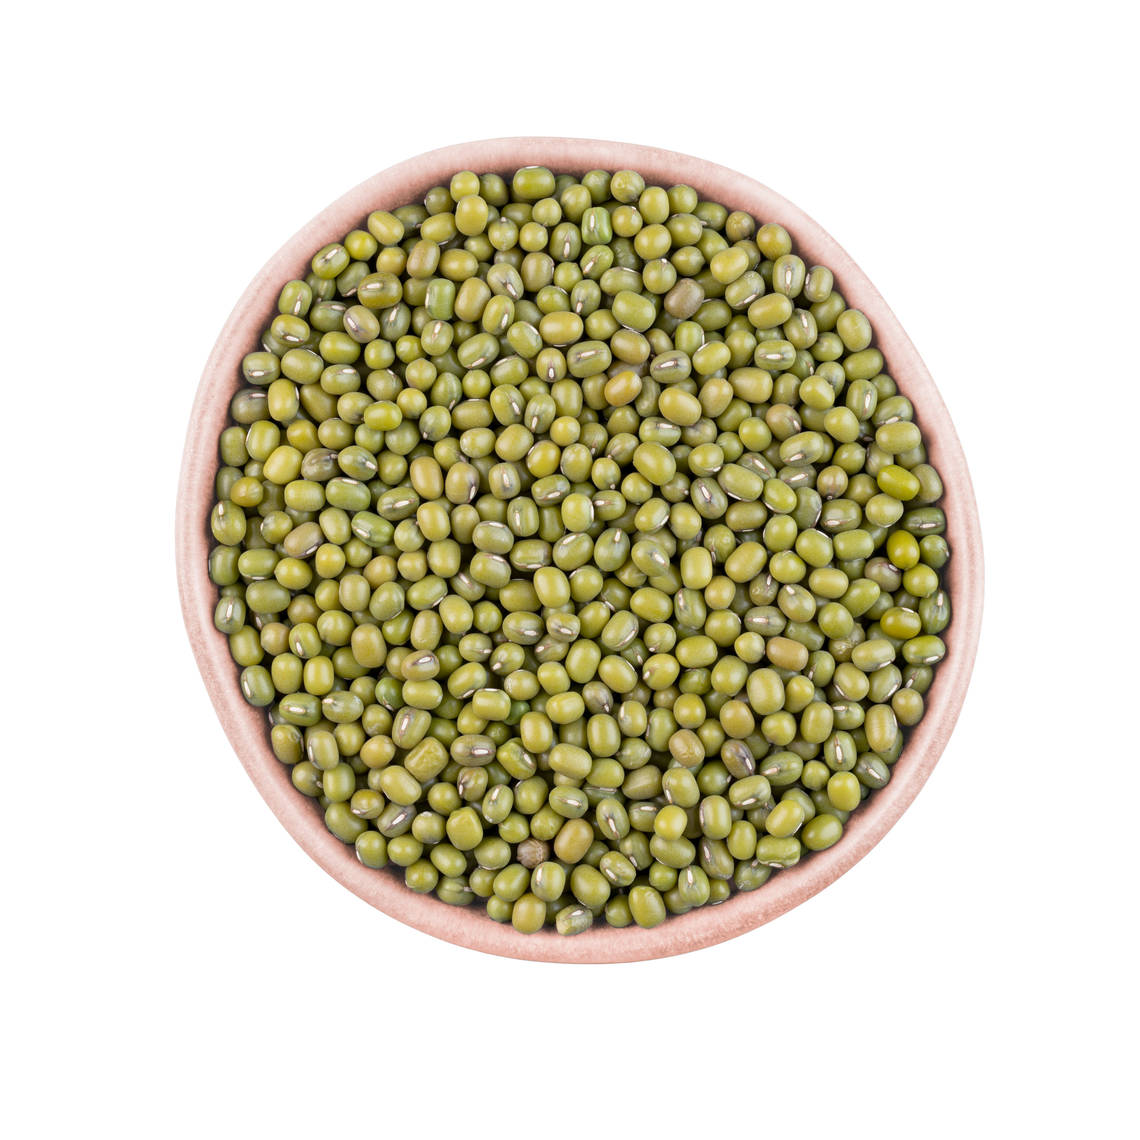 Los porotos mung, también conocidos como porotos moong, green grams o golden grams, son porotos verdes de forma redonda, de color amarillo claro en su interior.